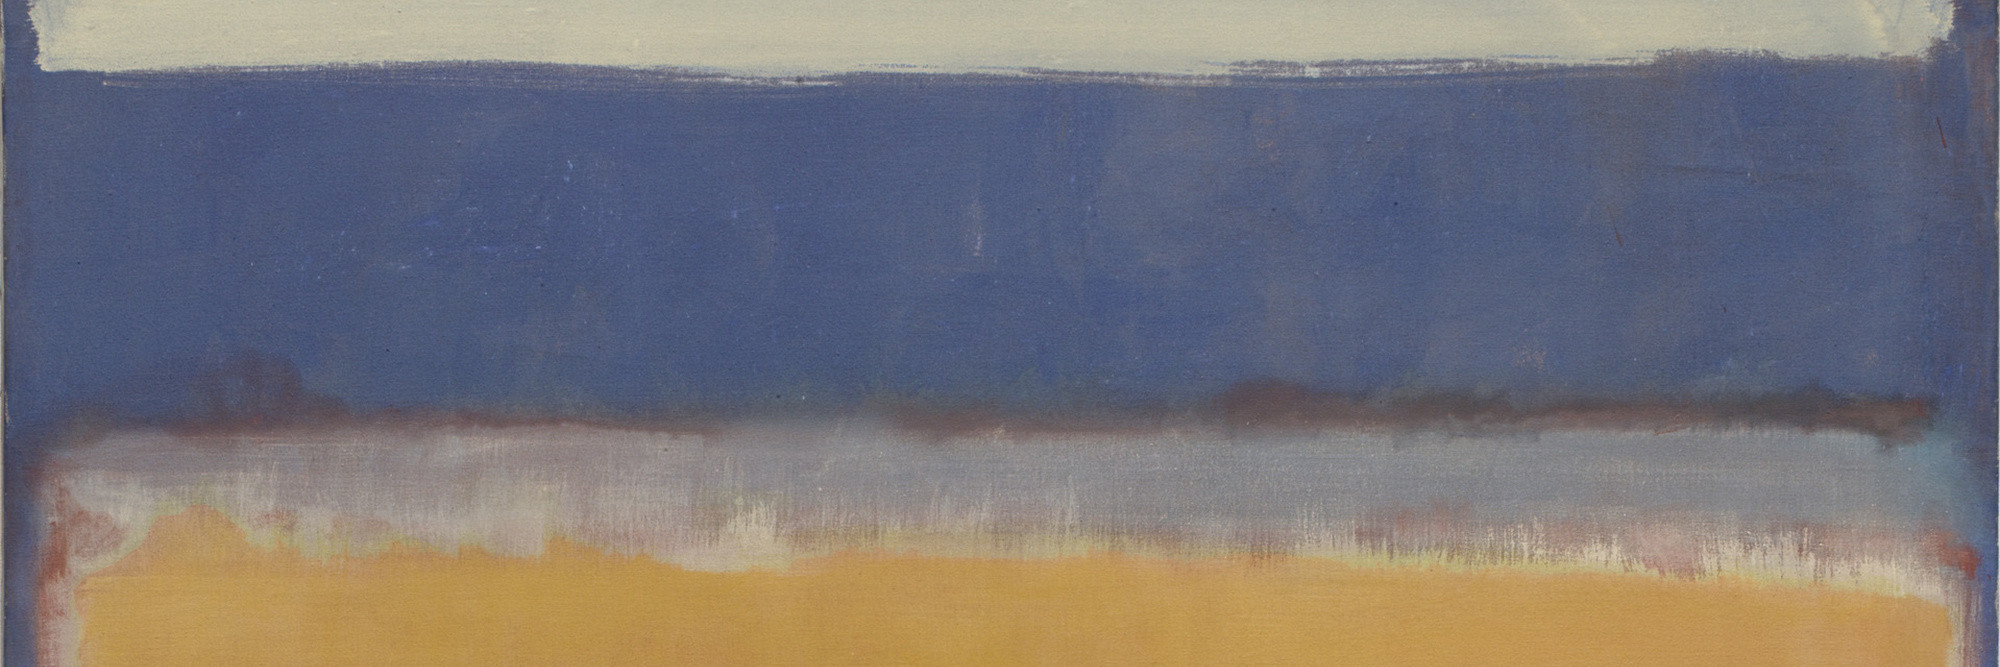 Mark Rothko. No. 10. 1950. Oil on canvas, 7&#39; 6 3/8&#34; × 57 1/8&#34; (229.6 × 145.1 cm). Gift of Philip Johnson. © 1998 Kate Rothko Prizel &amp; Christopher Rothko/Artists Rights Society (ARS), New York